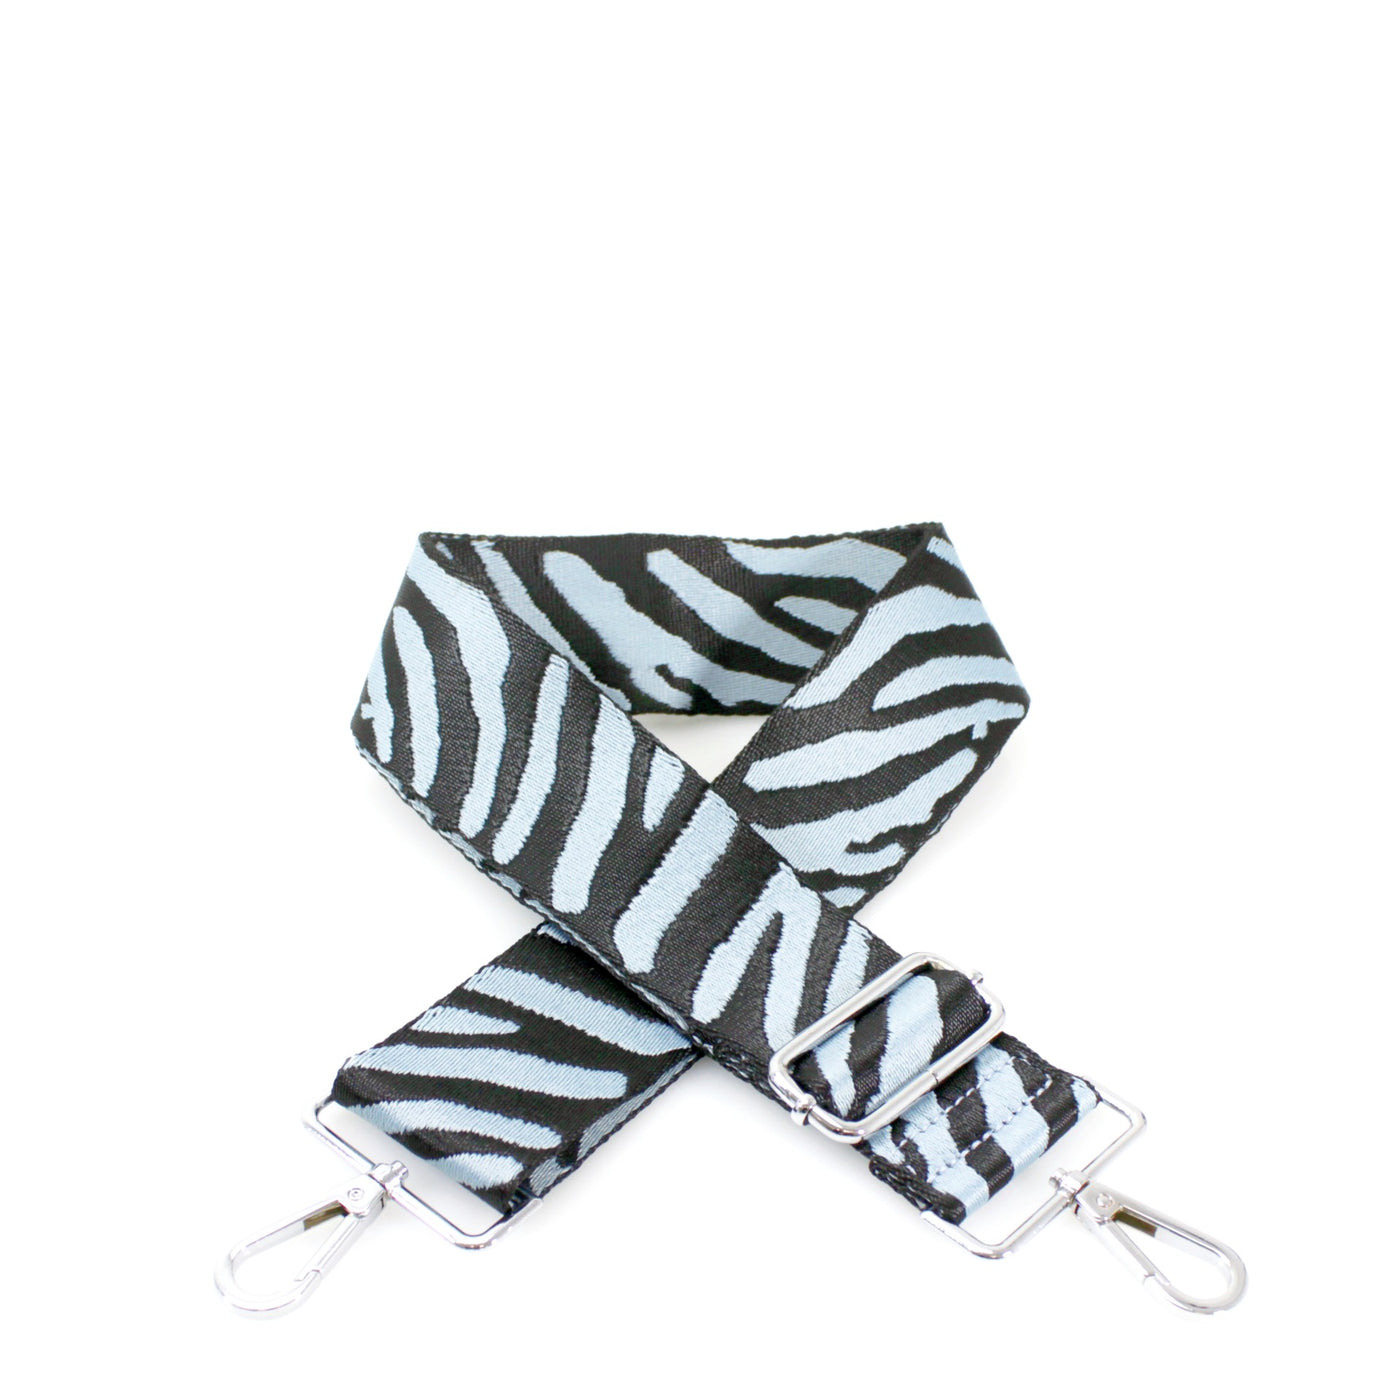 Black & Light Blue Zebra Print Bag Strap - Silver Fittings